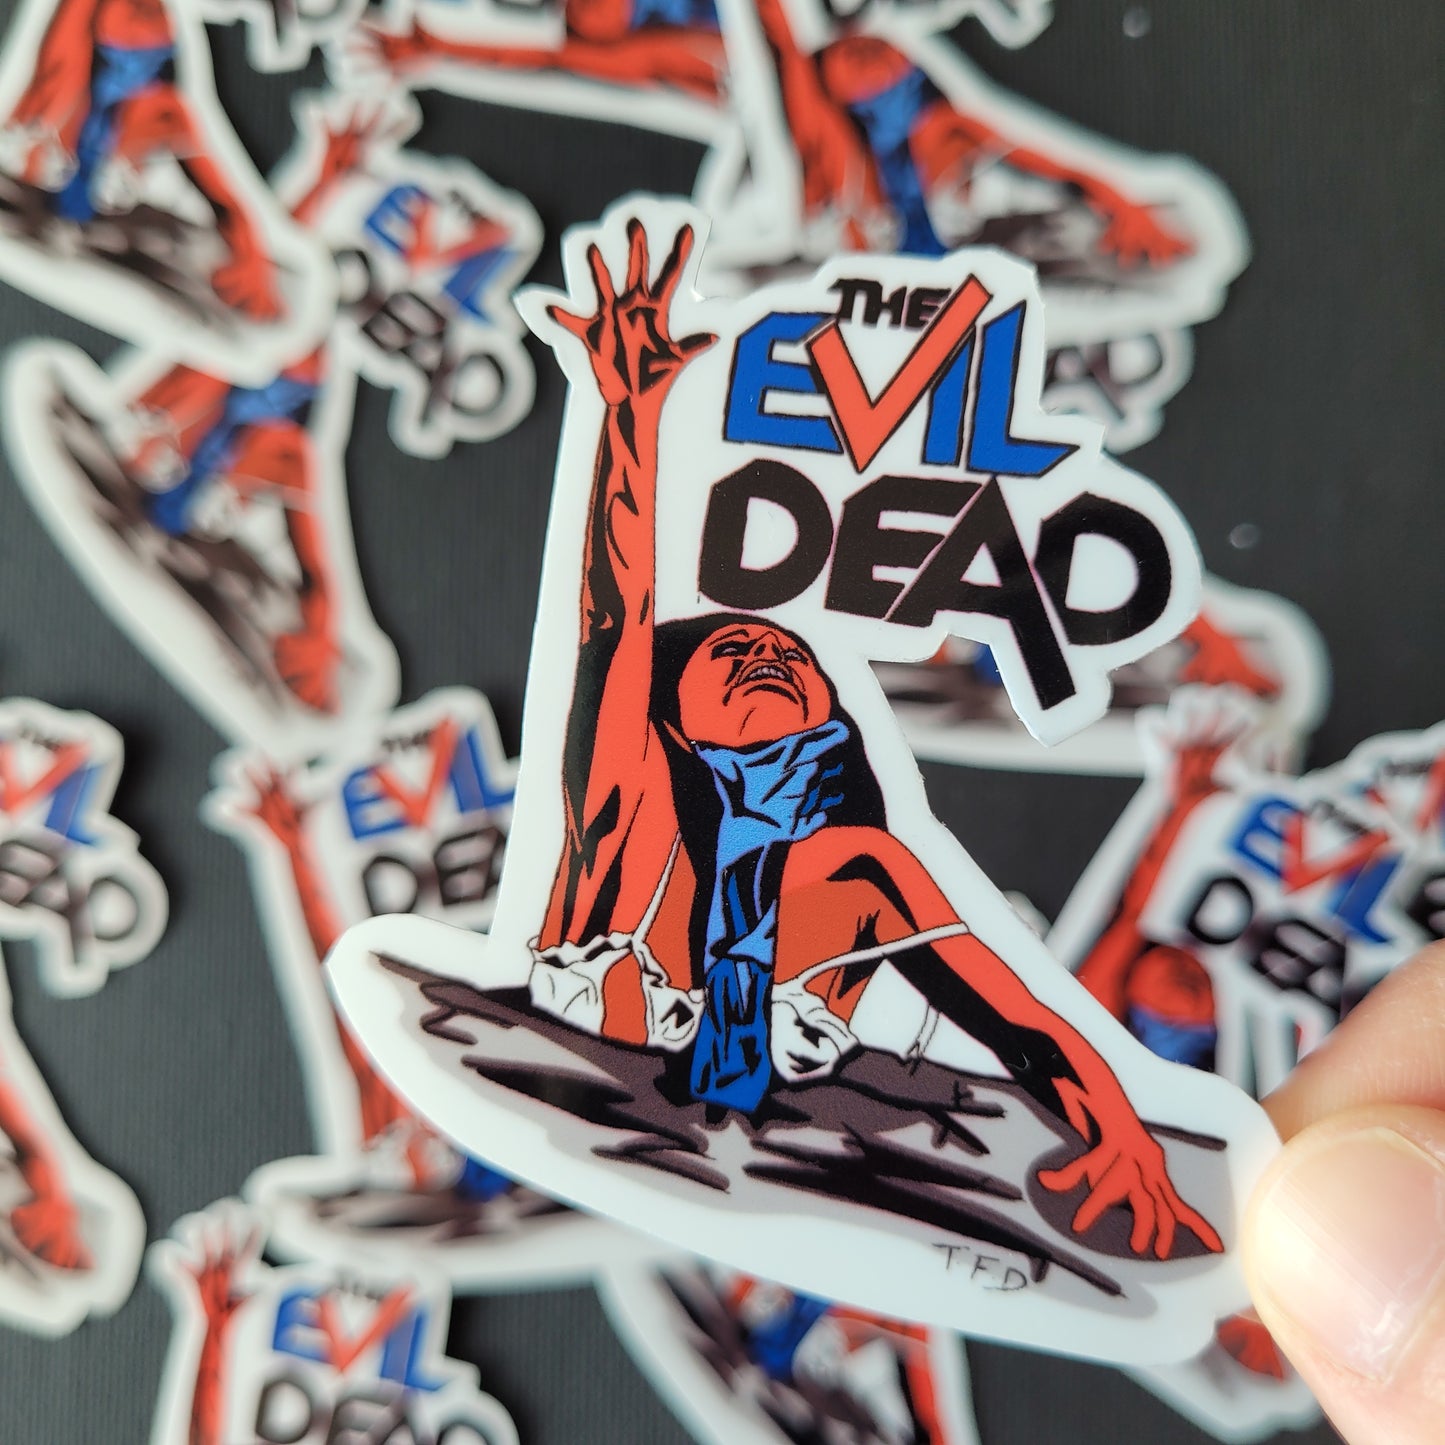 the evil dead sticker held in fingers